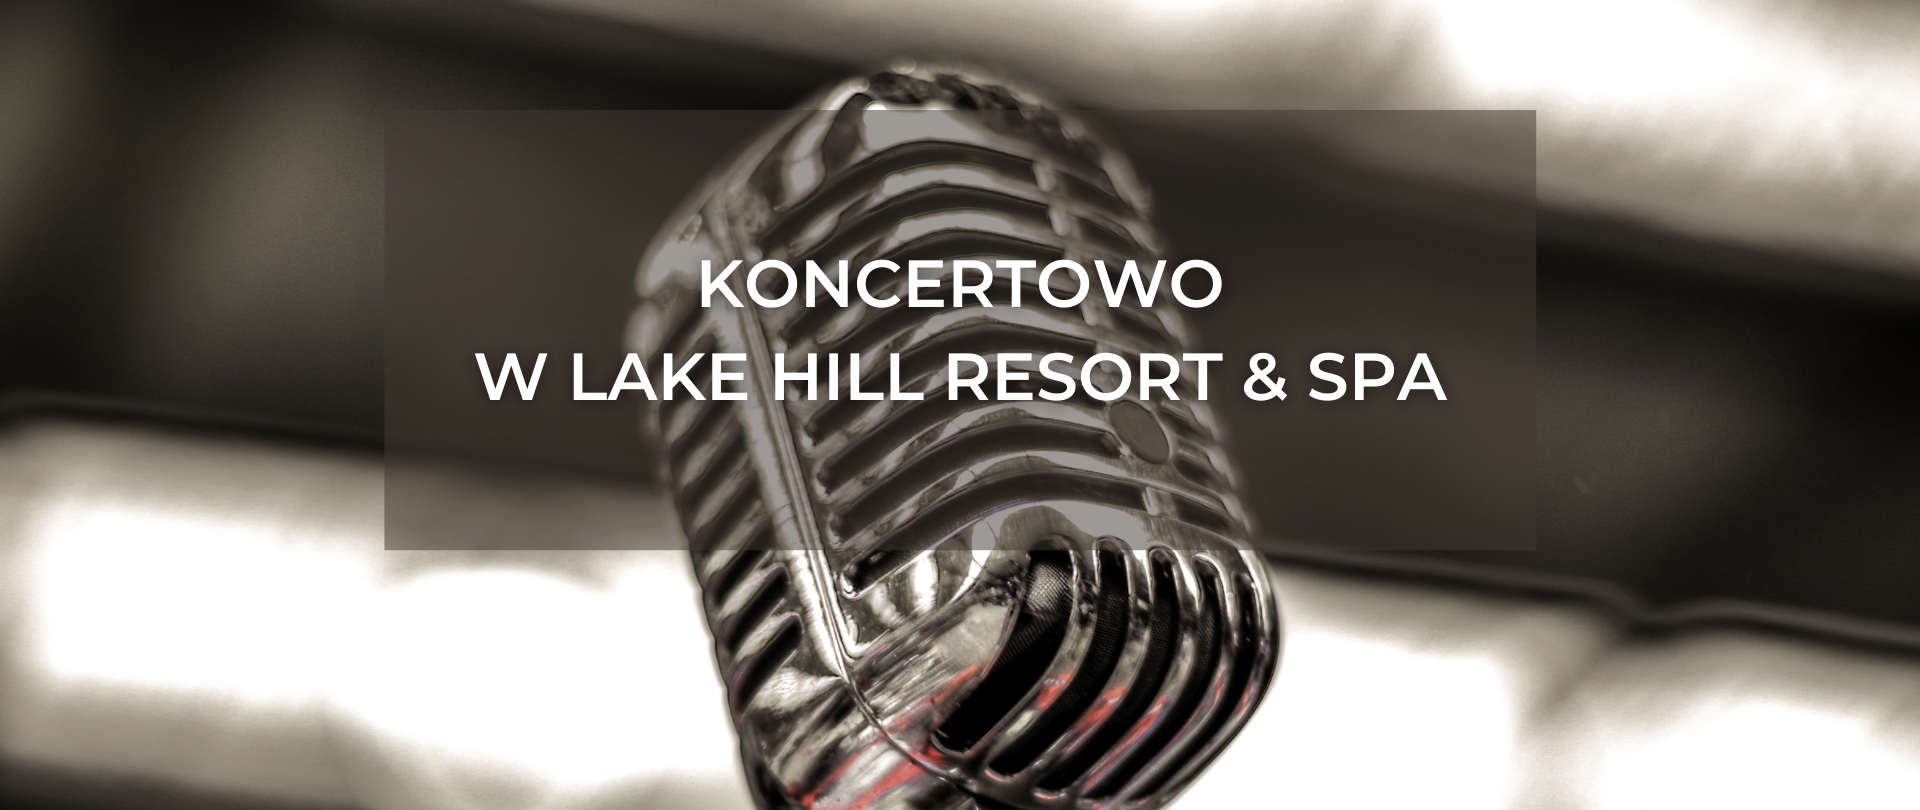 Concert at Lake Hill Resort & SPA